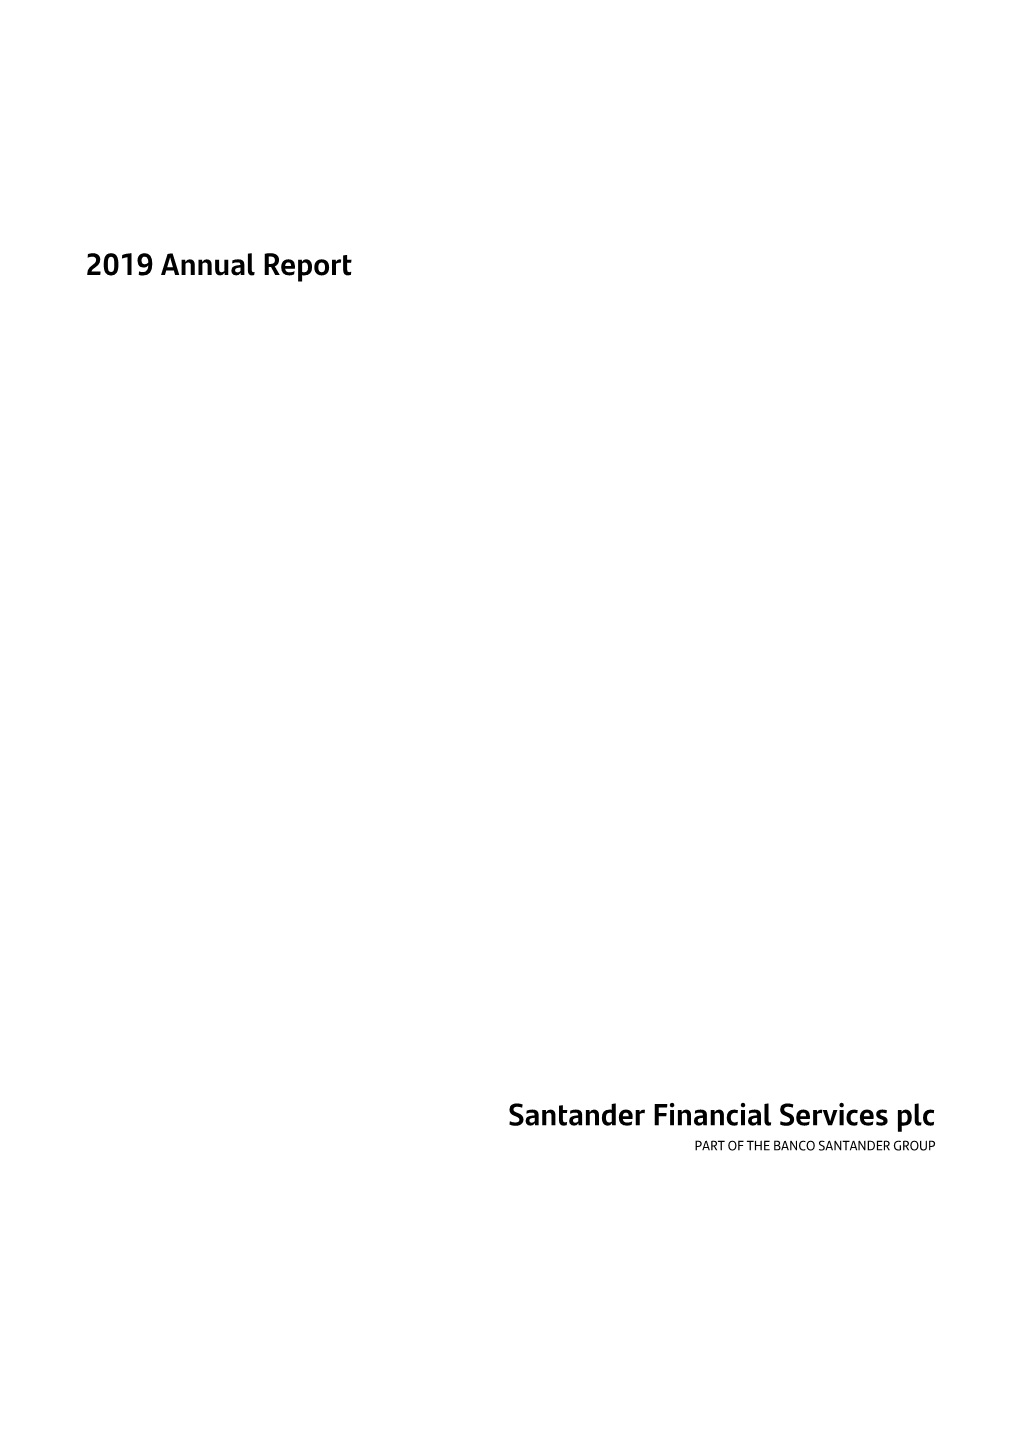 2019 Annual Report Santander Financial Services